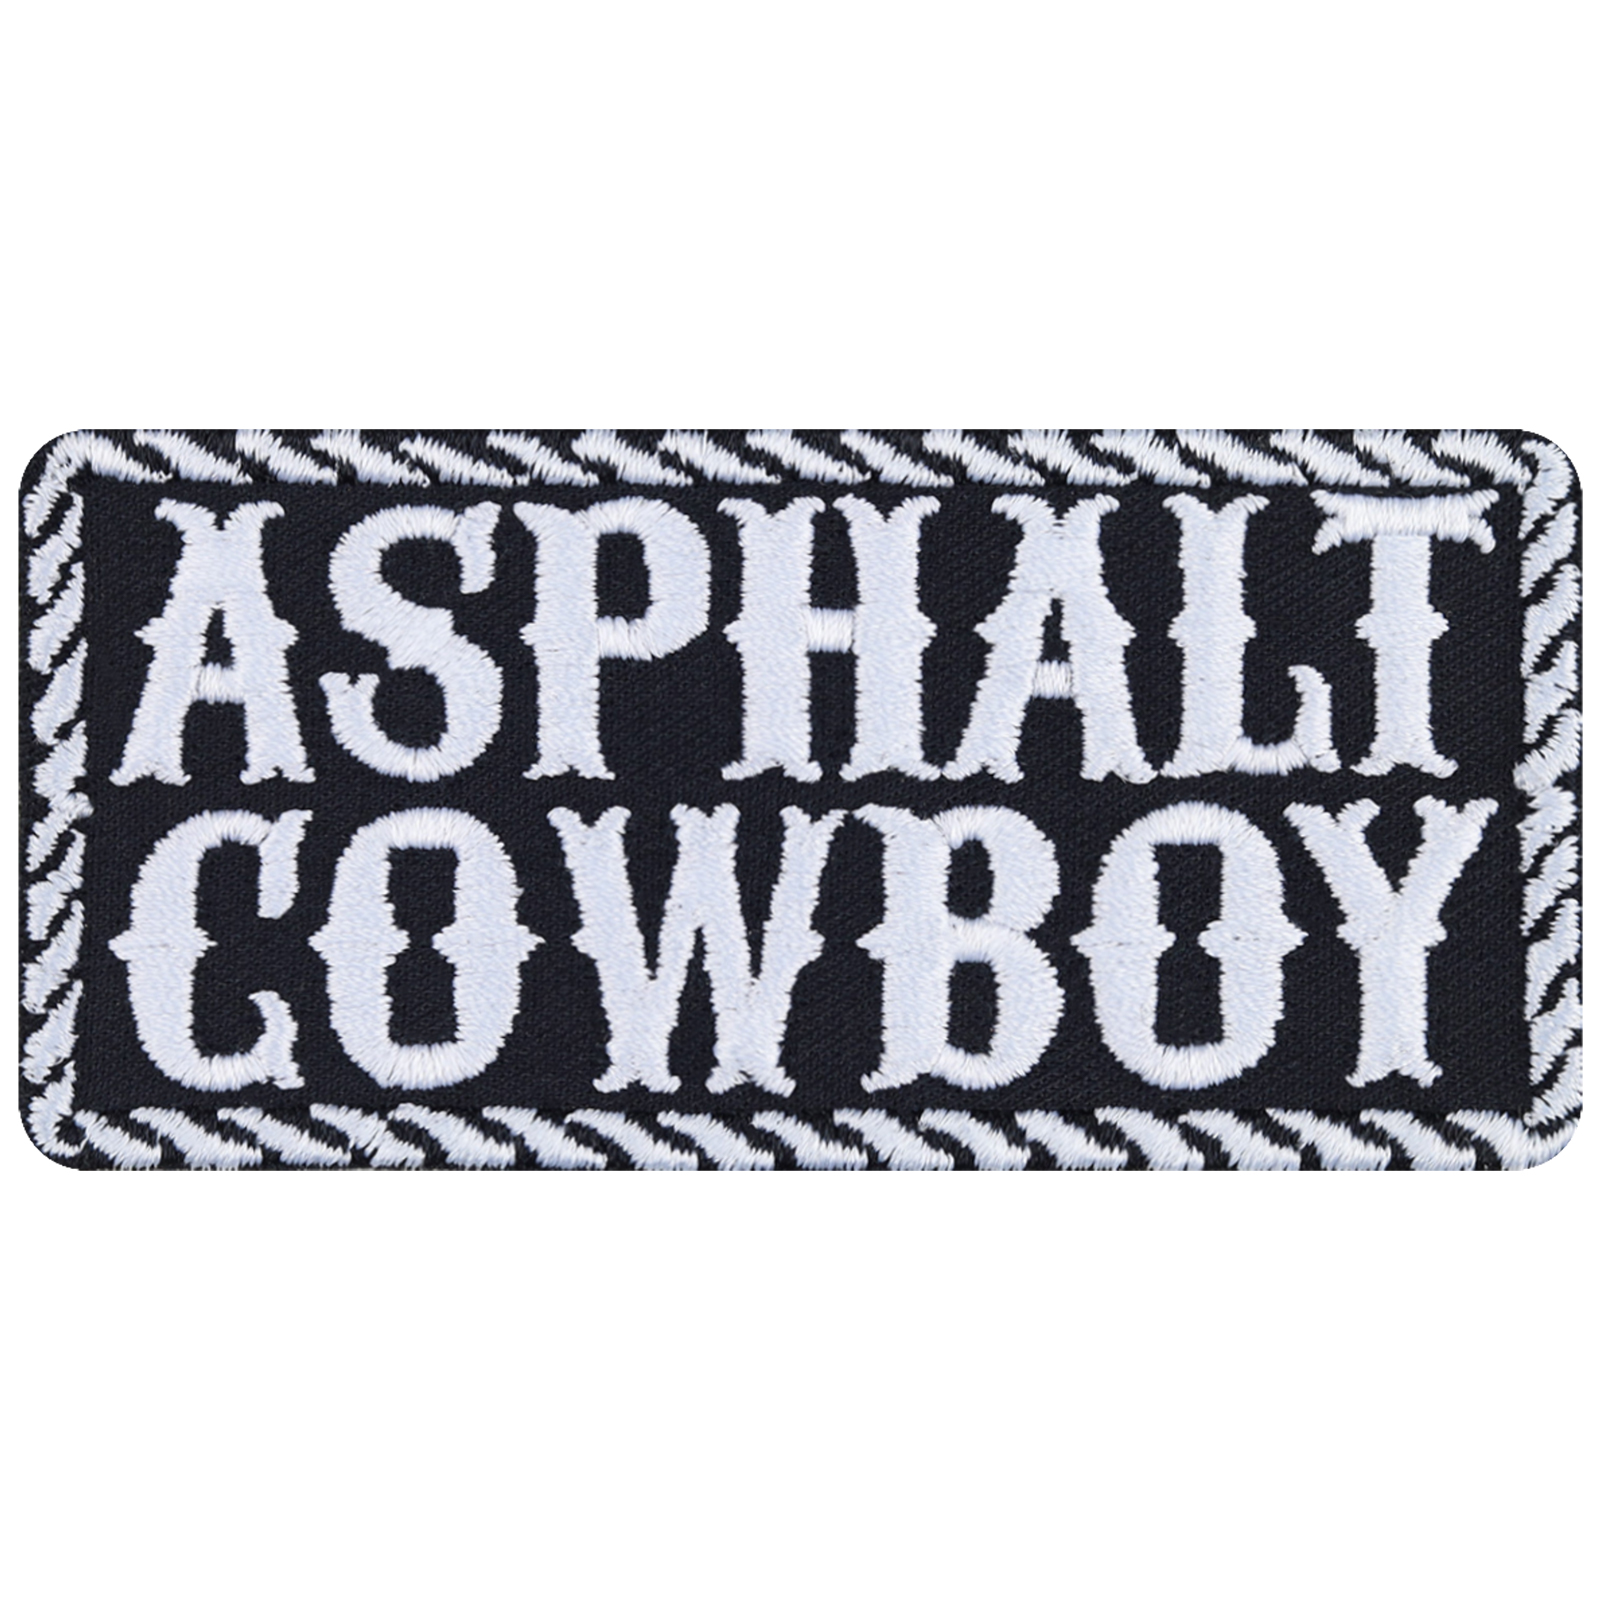 Asphalt cowboy - Patch